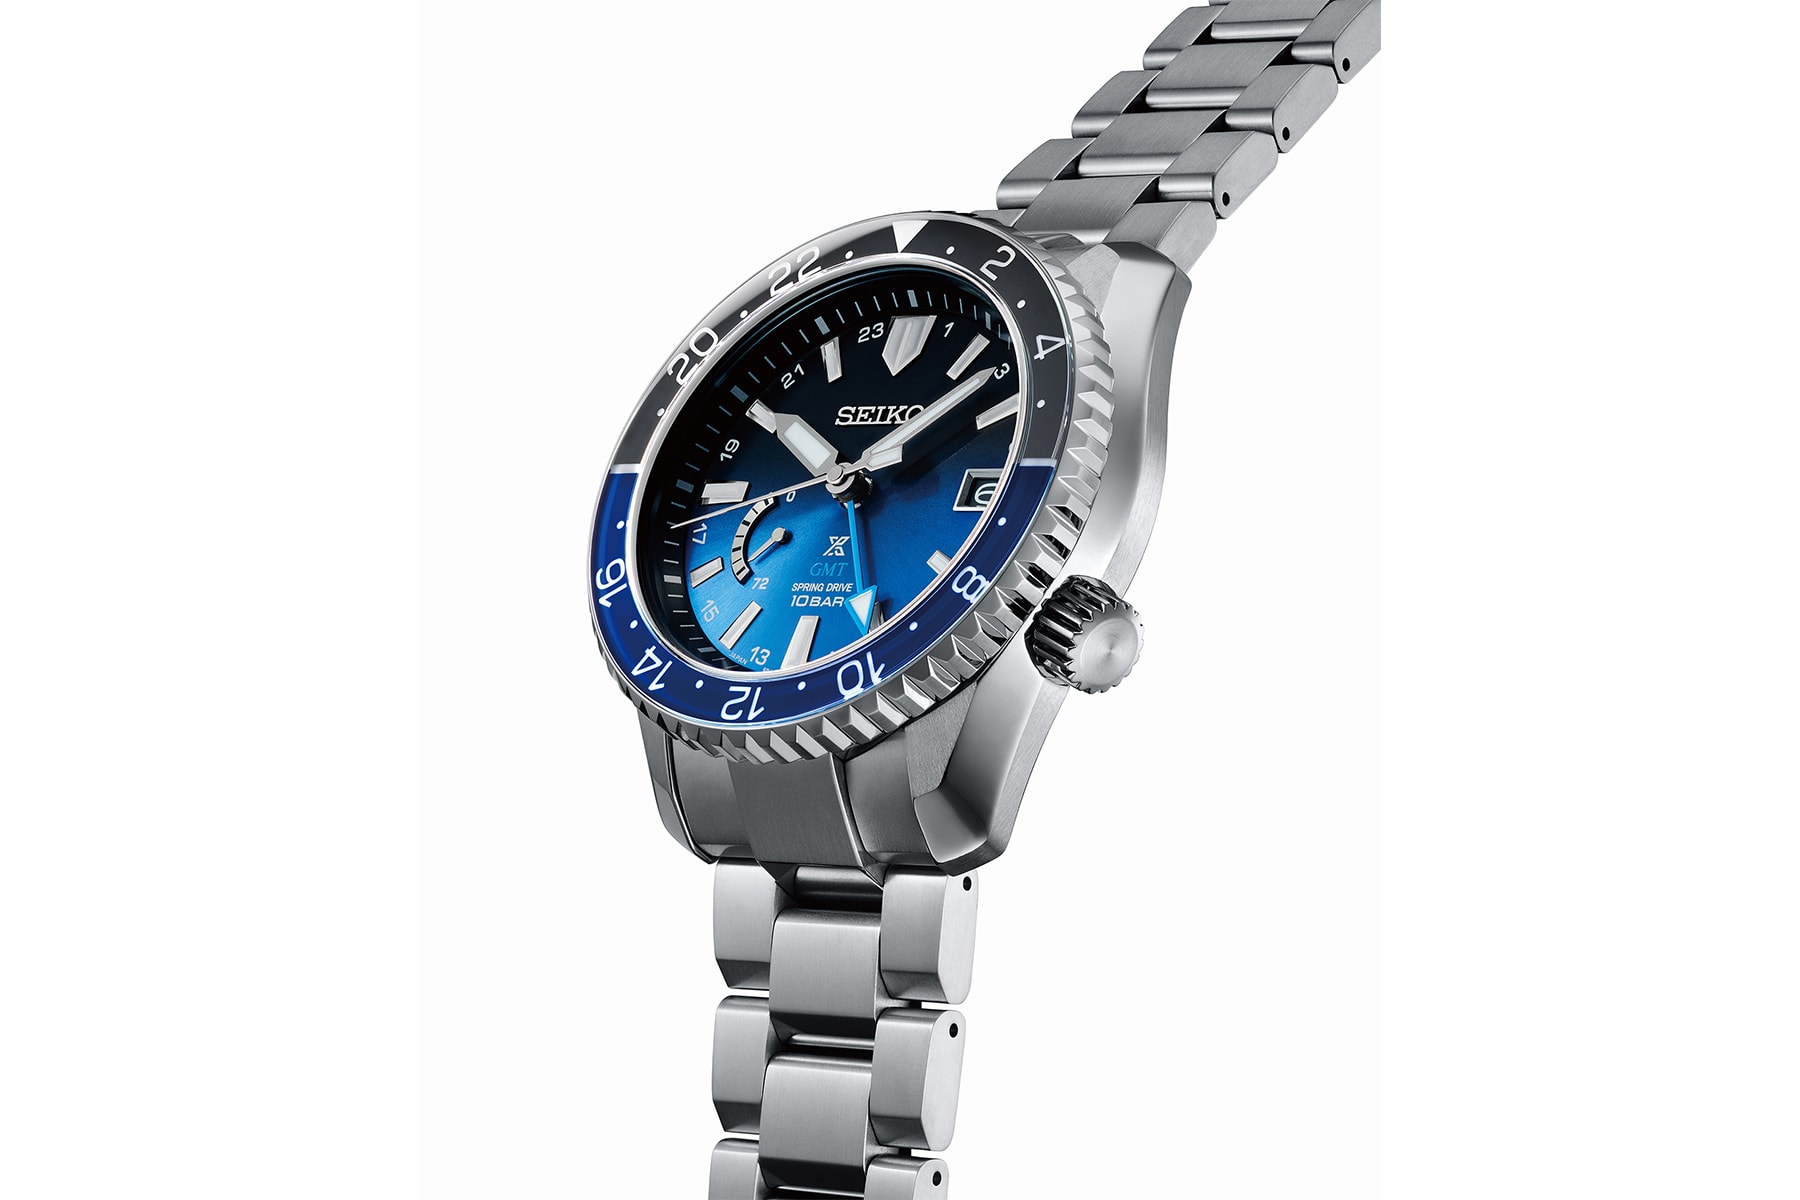 Seiko Prospex 全新 LX 系列限量 400 枚錶款發佈